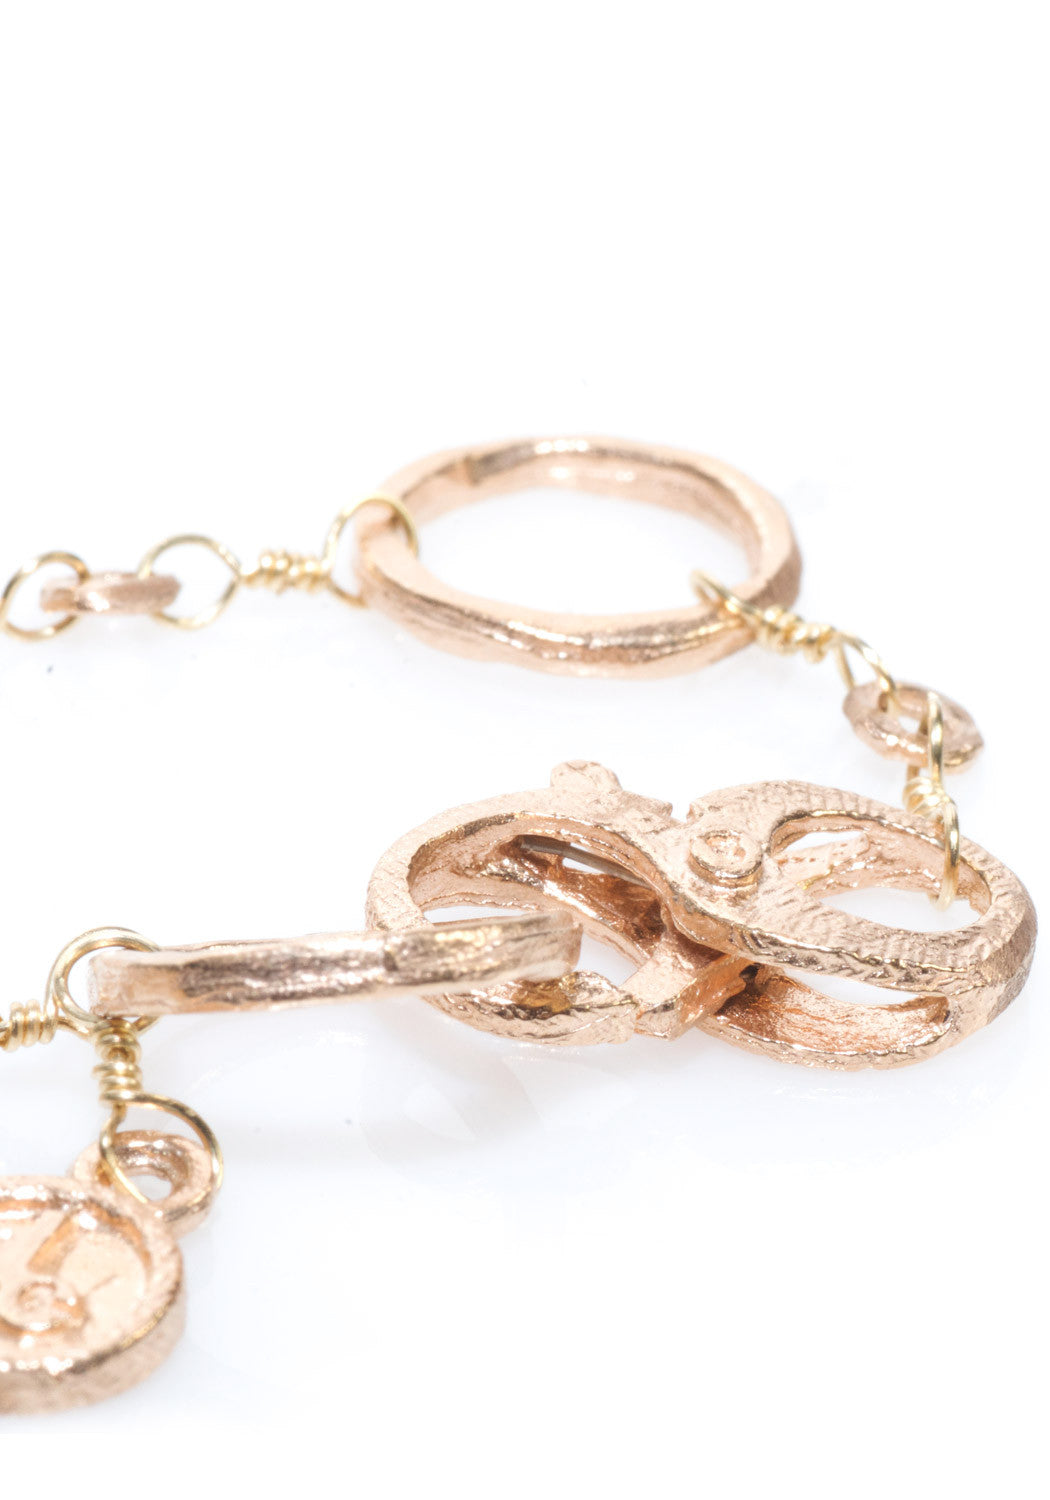 Dominique Cohen 18K Rose Gold Circle Chain Necklace | OsterJewelers.com